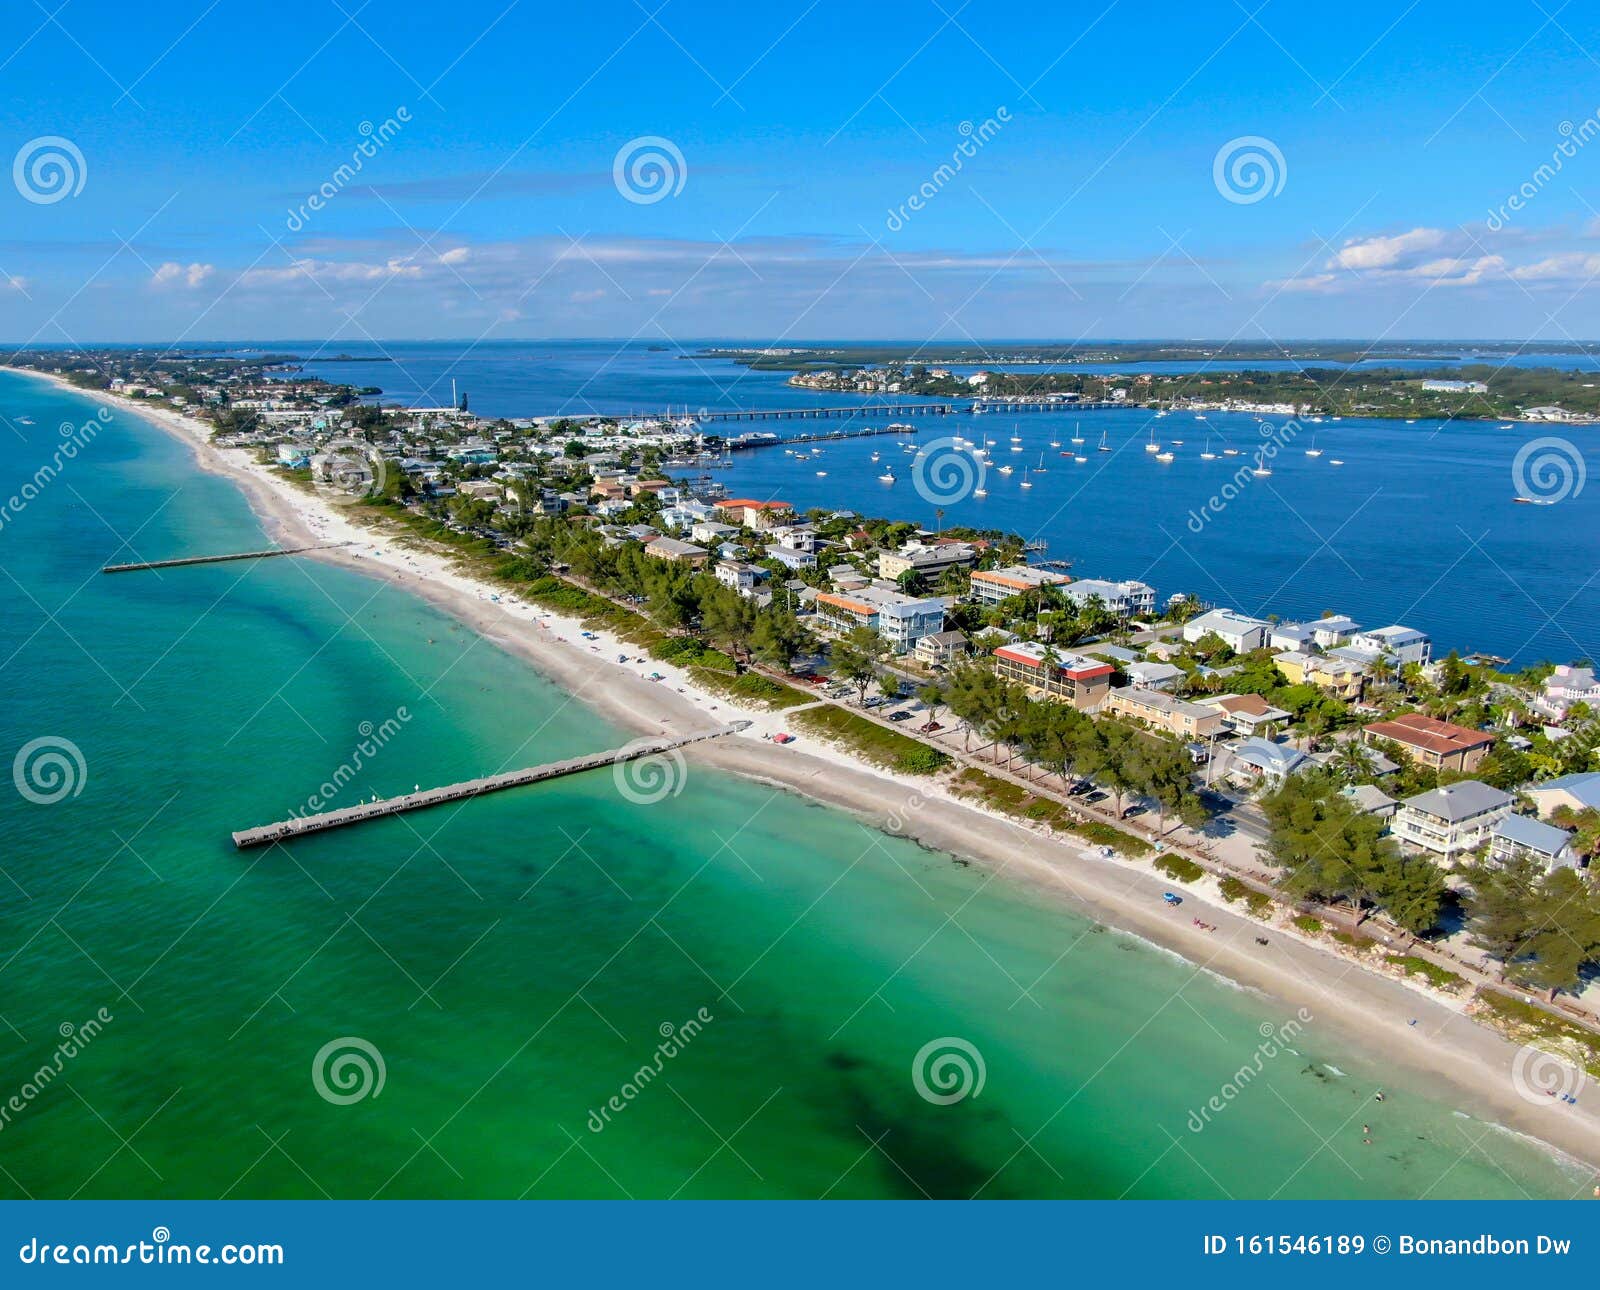 cortez beach and little pier, anna maria island